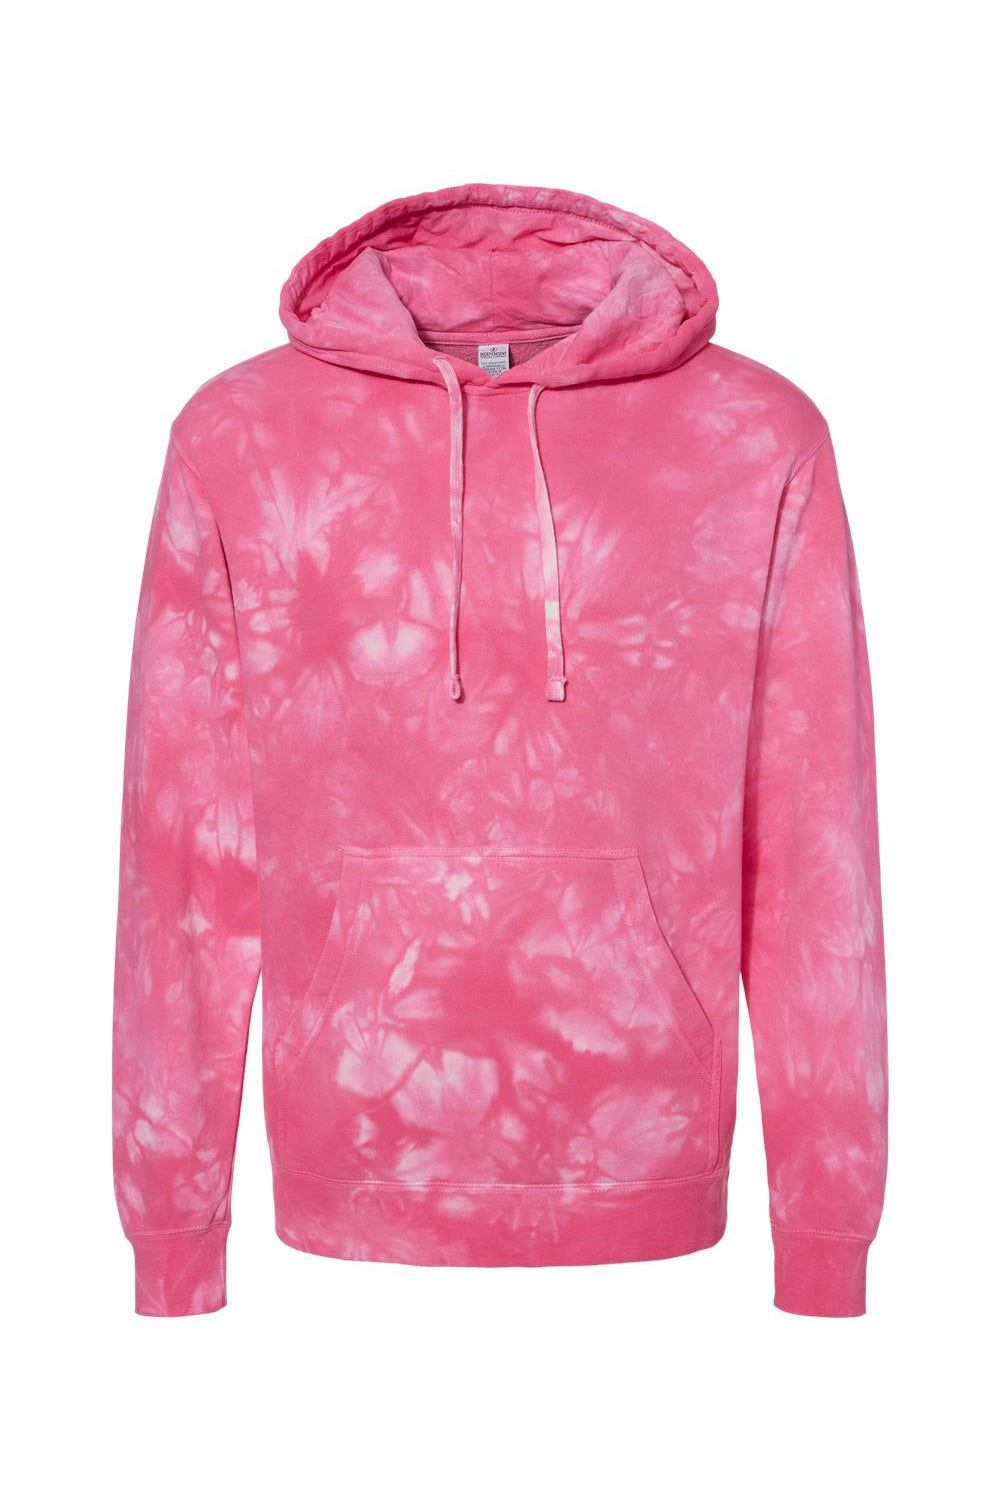 Independent Trading Co. PRM4500TD Mens Tie-Dye Hooded Sweatshirt Hoodie Pink Flat Front